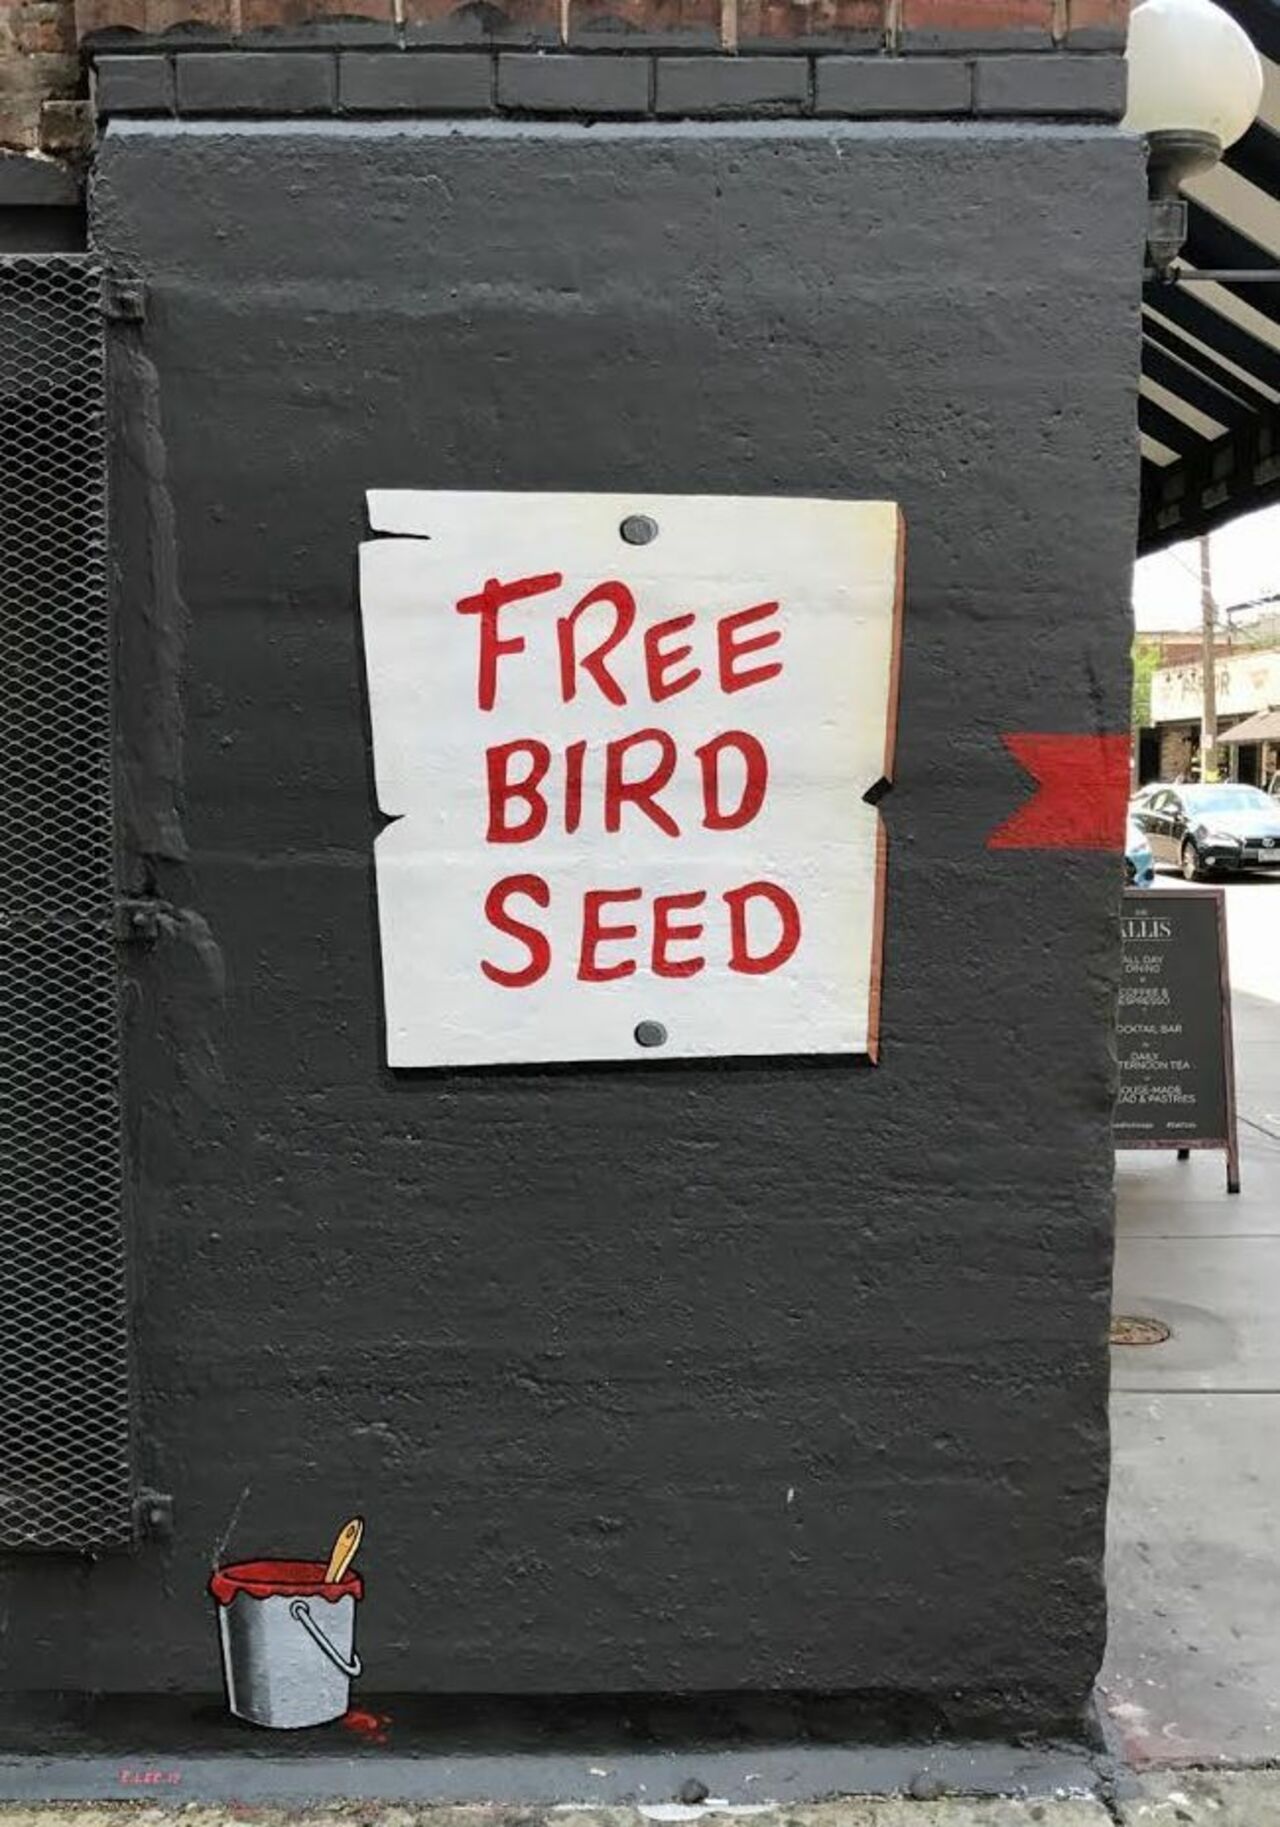 E. LEE Entices Us With “Free Bird Seed” In Chicago #streetart #mural #graffiti #art https://t.co/ZaRzfIrcqb